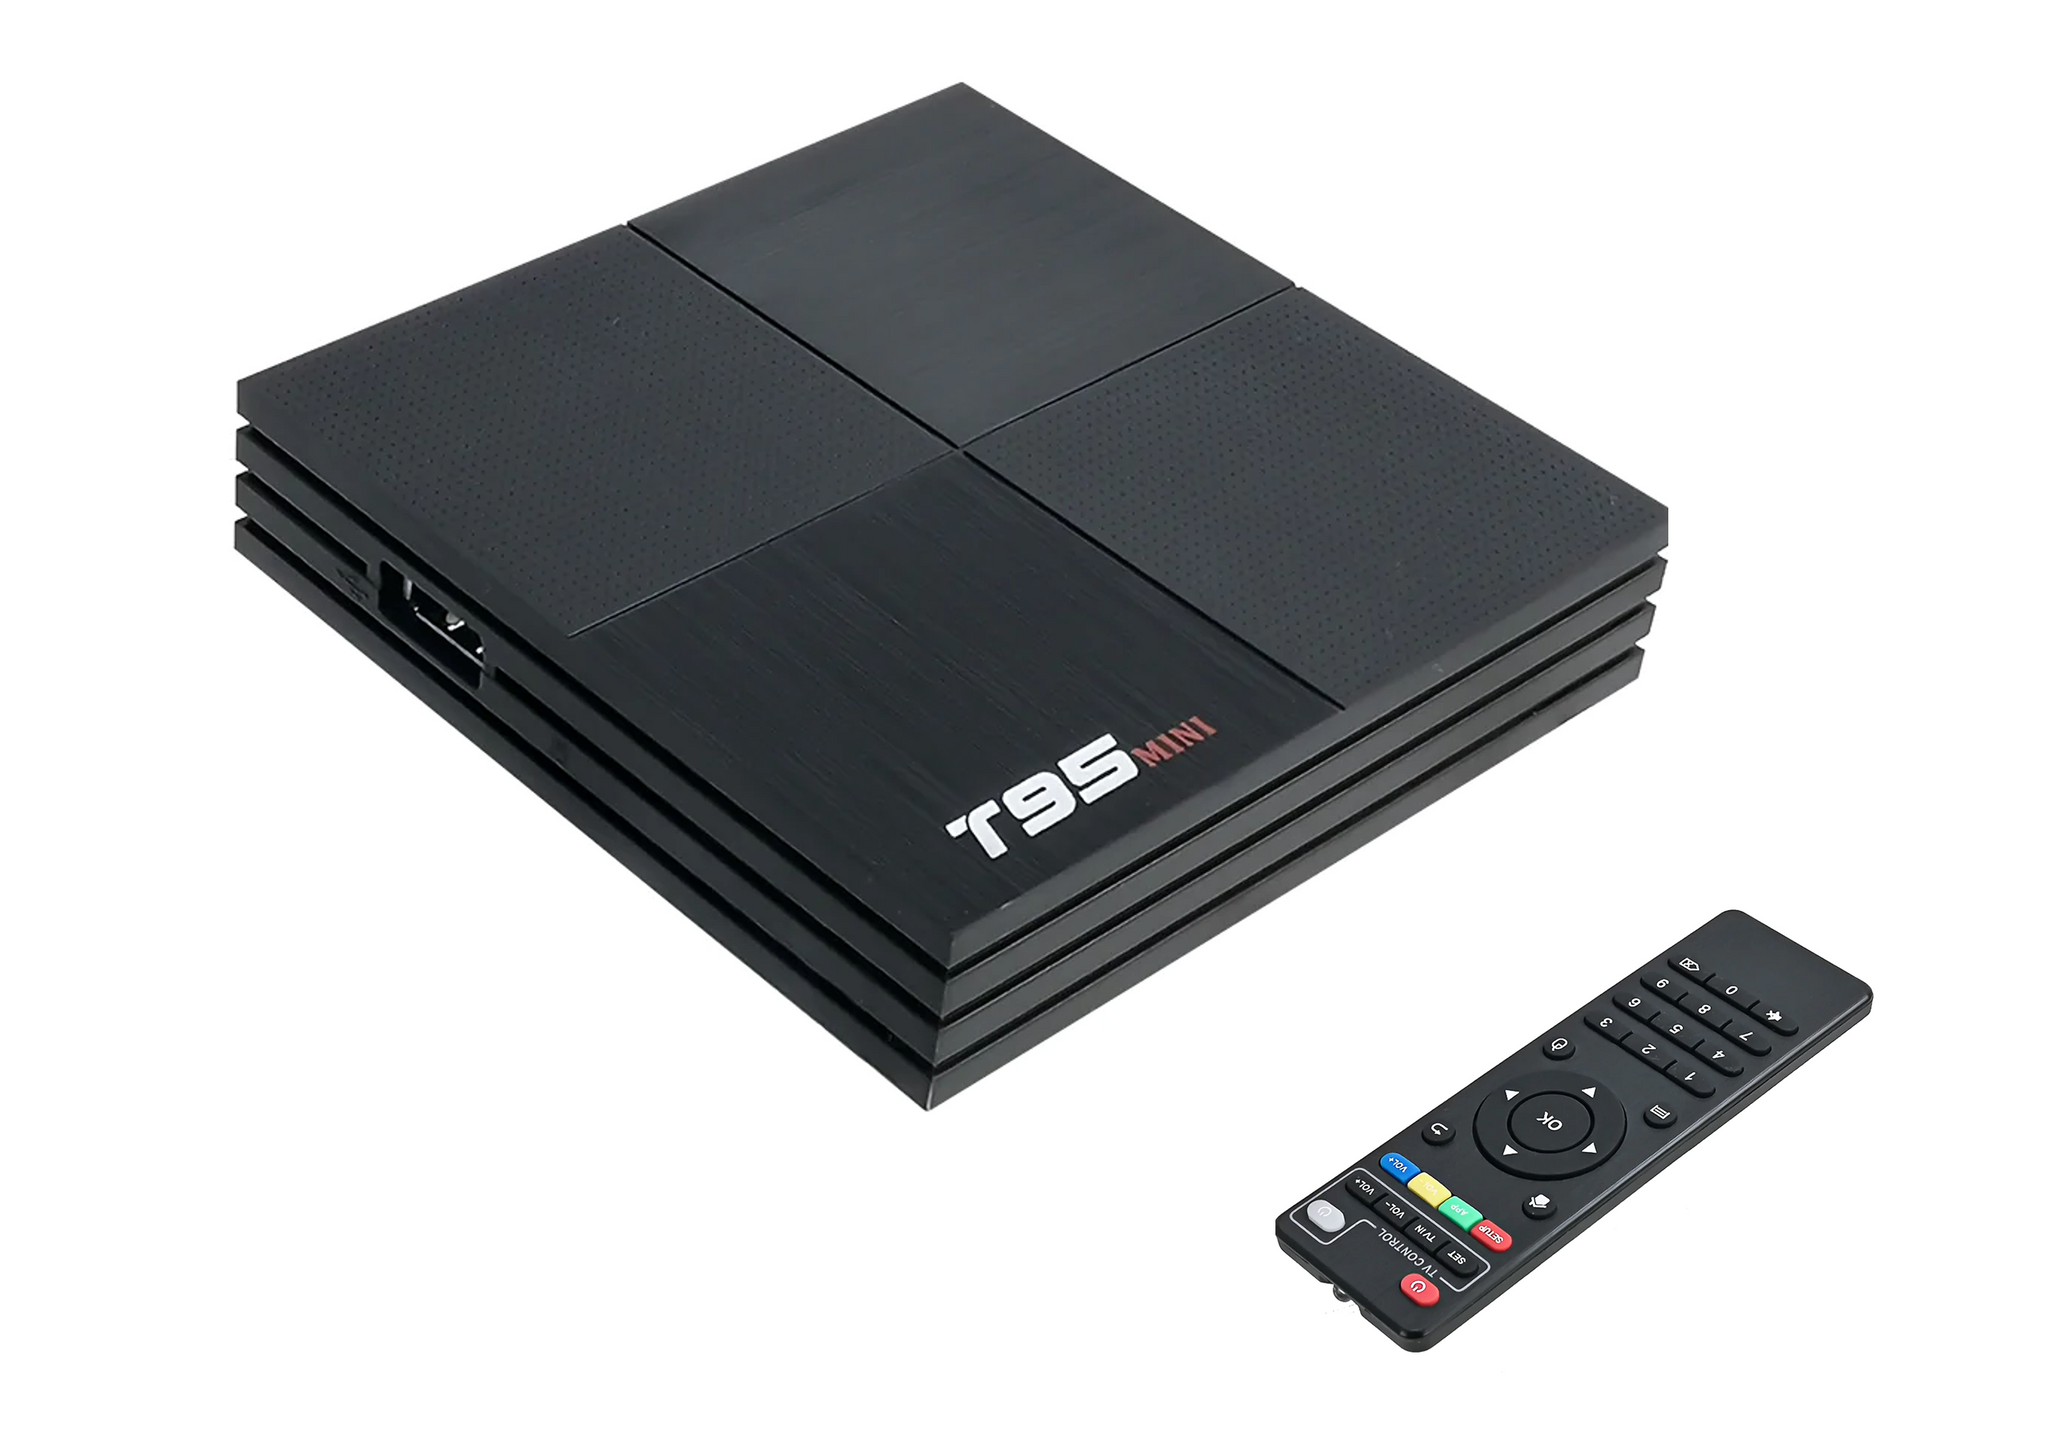 Reproductor multimedia SmartTV: » Accesorios Tv